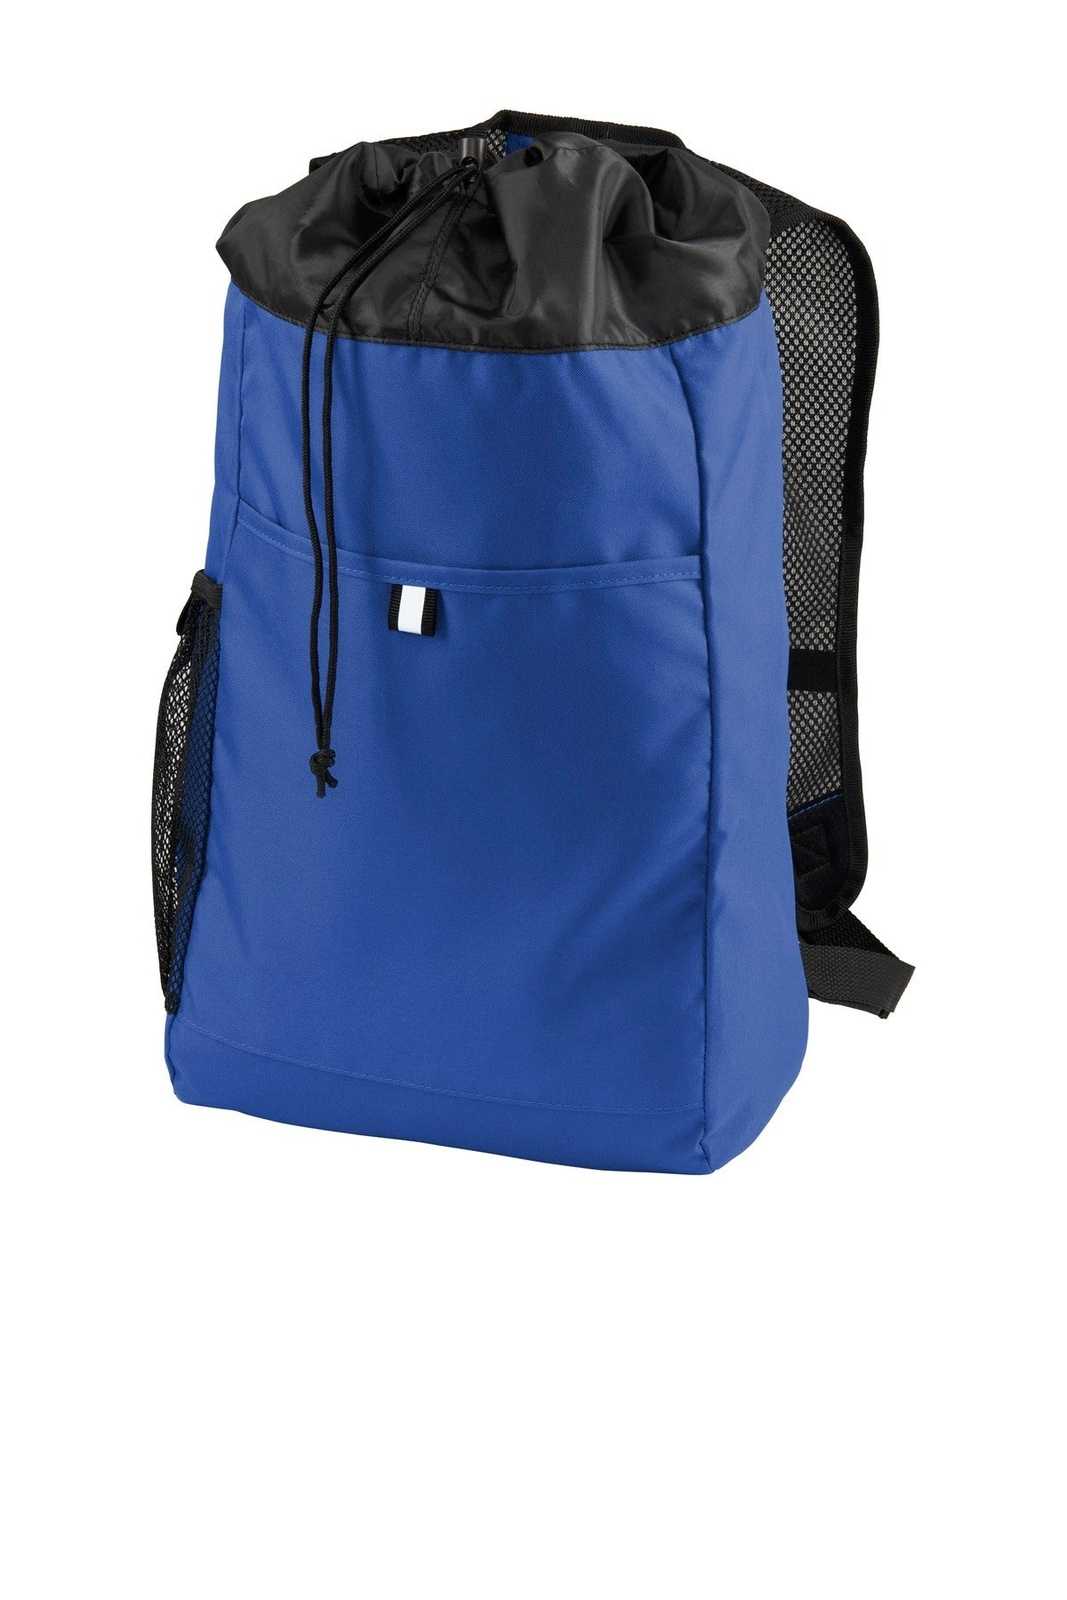 Port Authority BG211 Hybrid Backpack - Royal Black - HIT a Double - 1